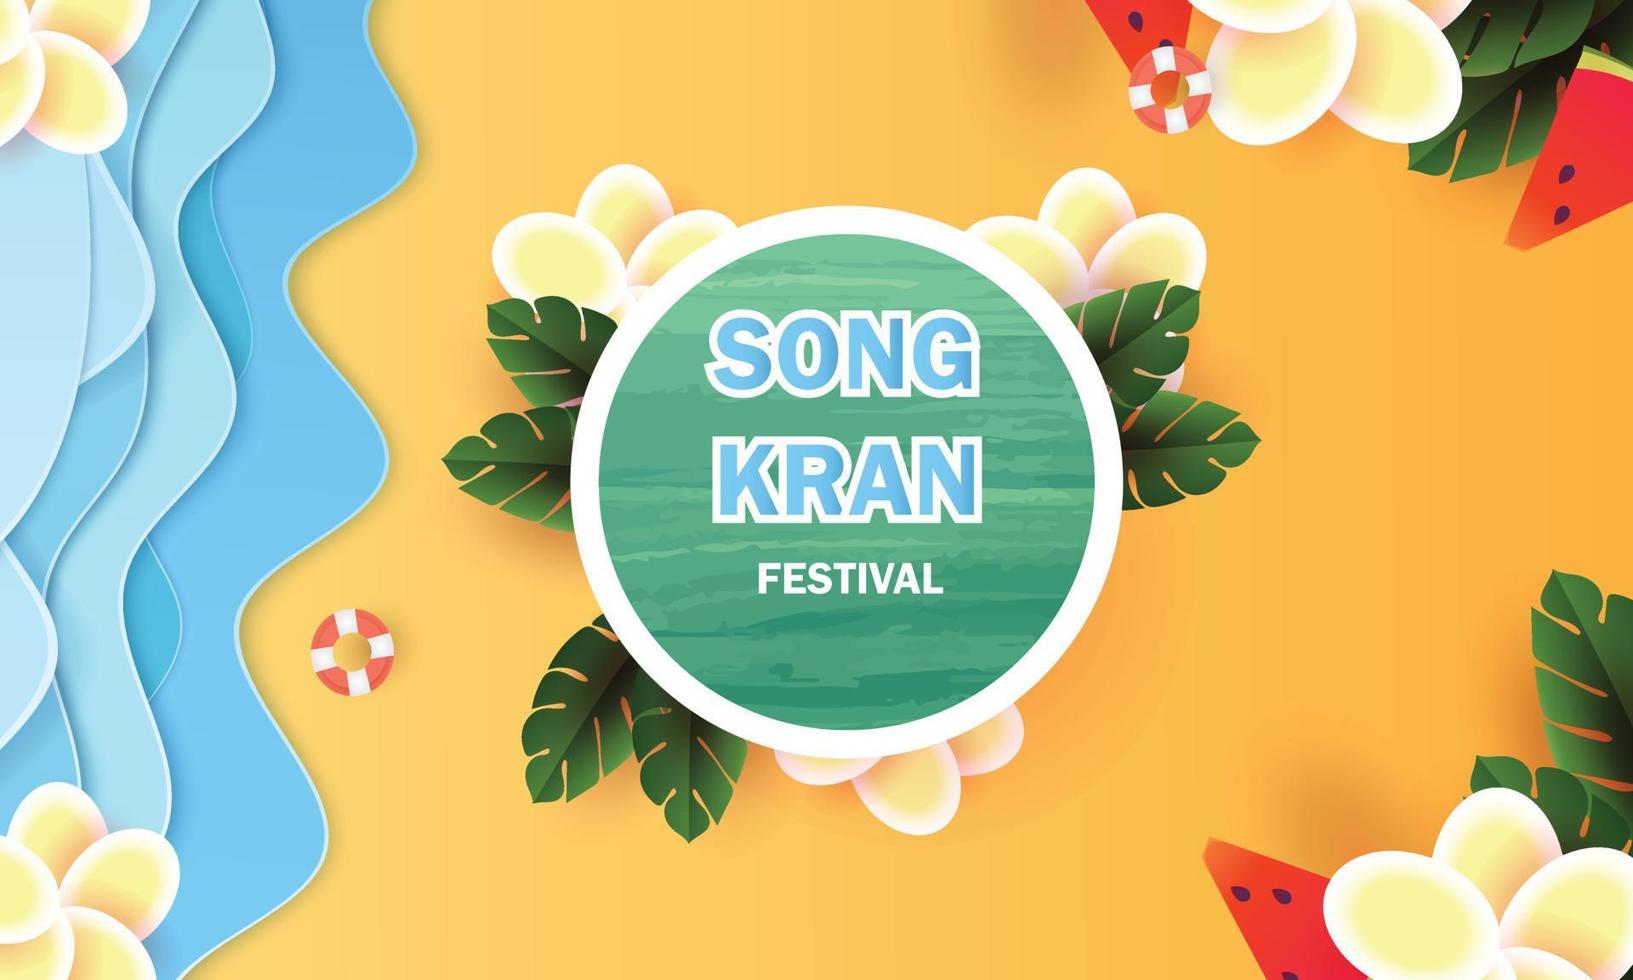 happy songkran festival in thailand verkaufsplakat vecter blume auf sumer april vorlagenkonzept vektor